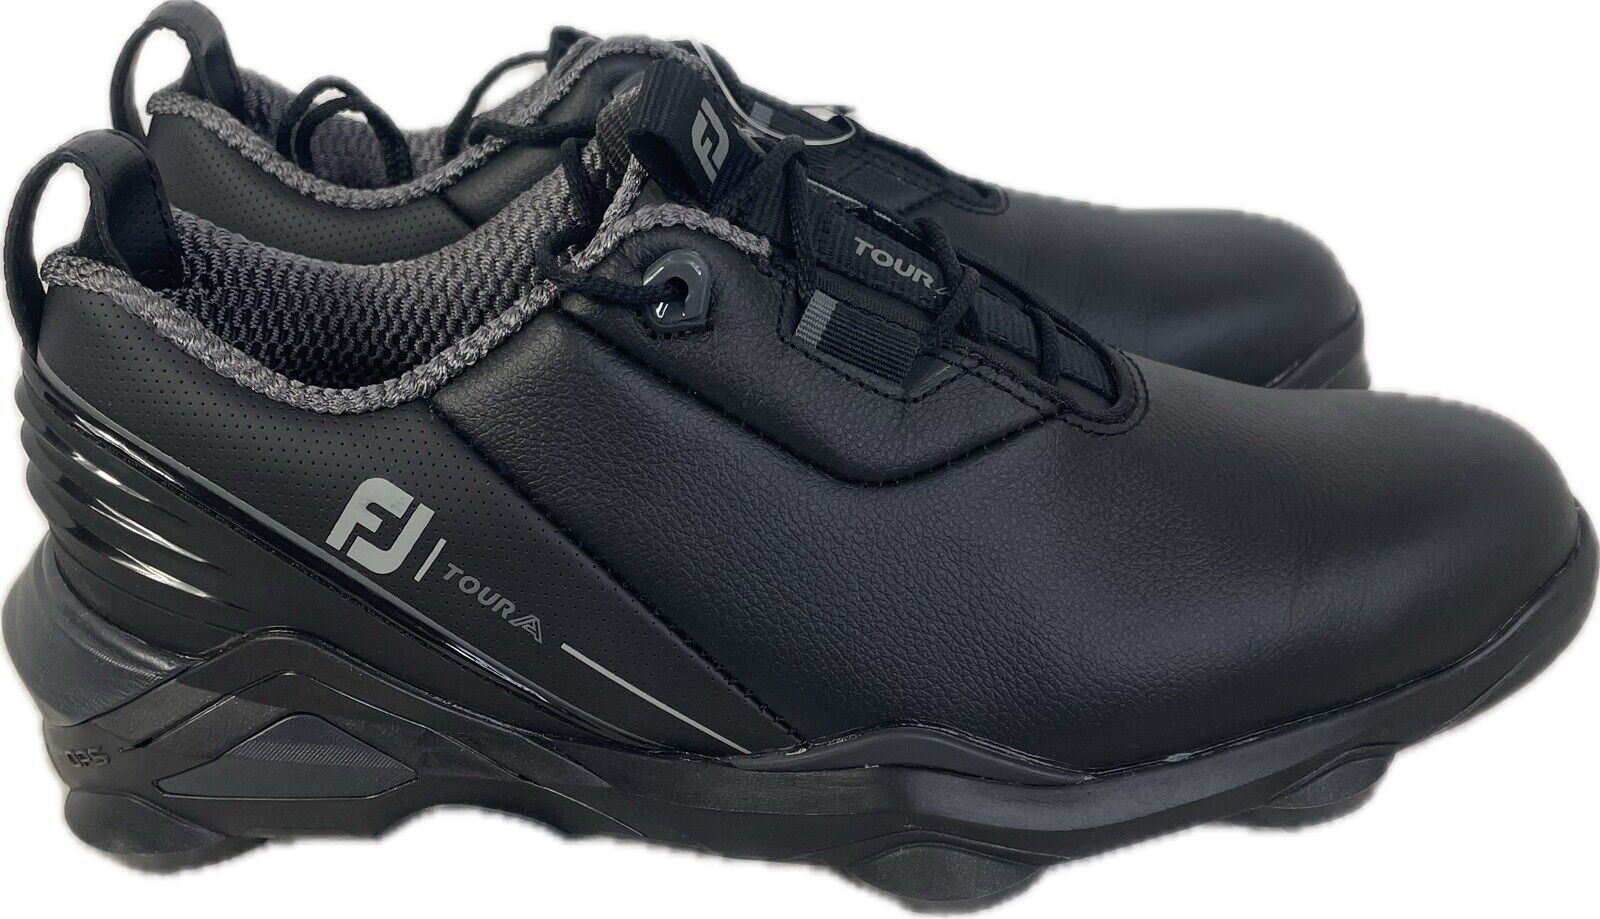 FootJoy Tour Alpha Golf Shoes 55507 – Black/Charcoal/Red Size 7.5